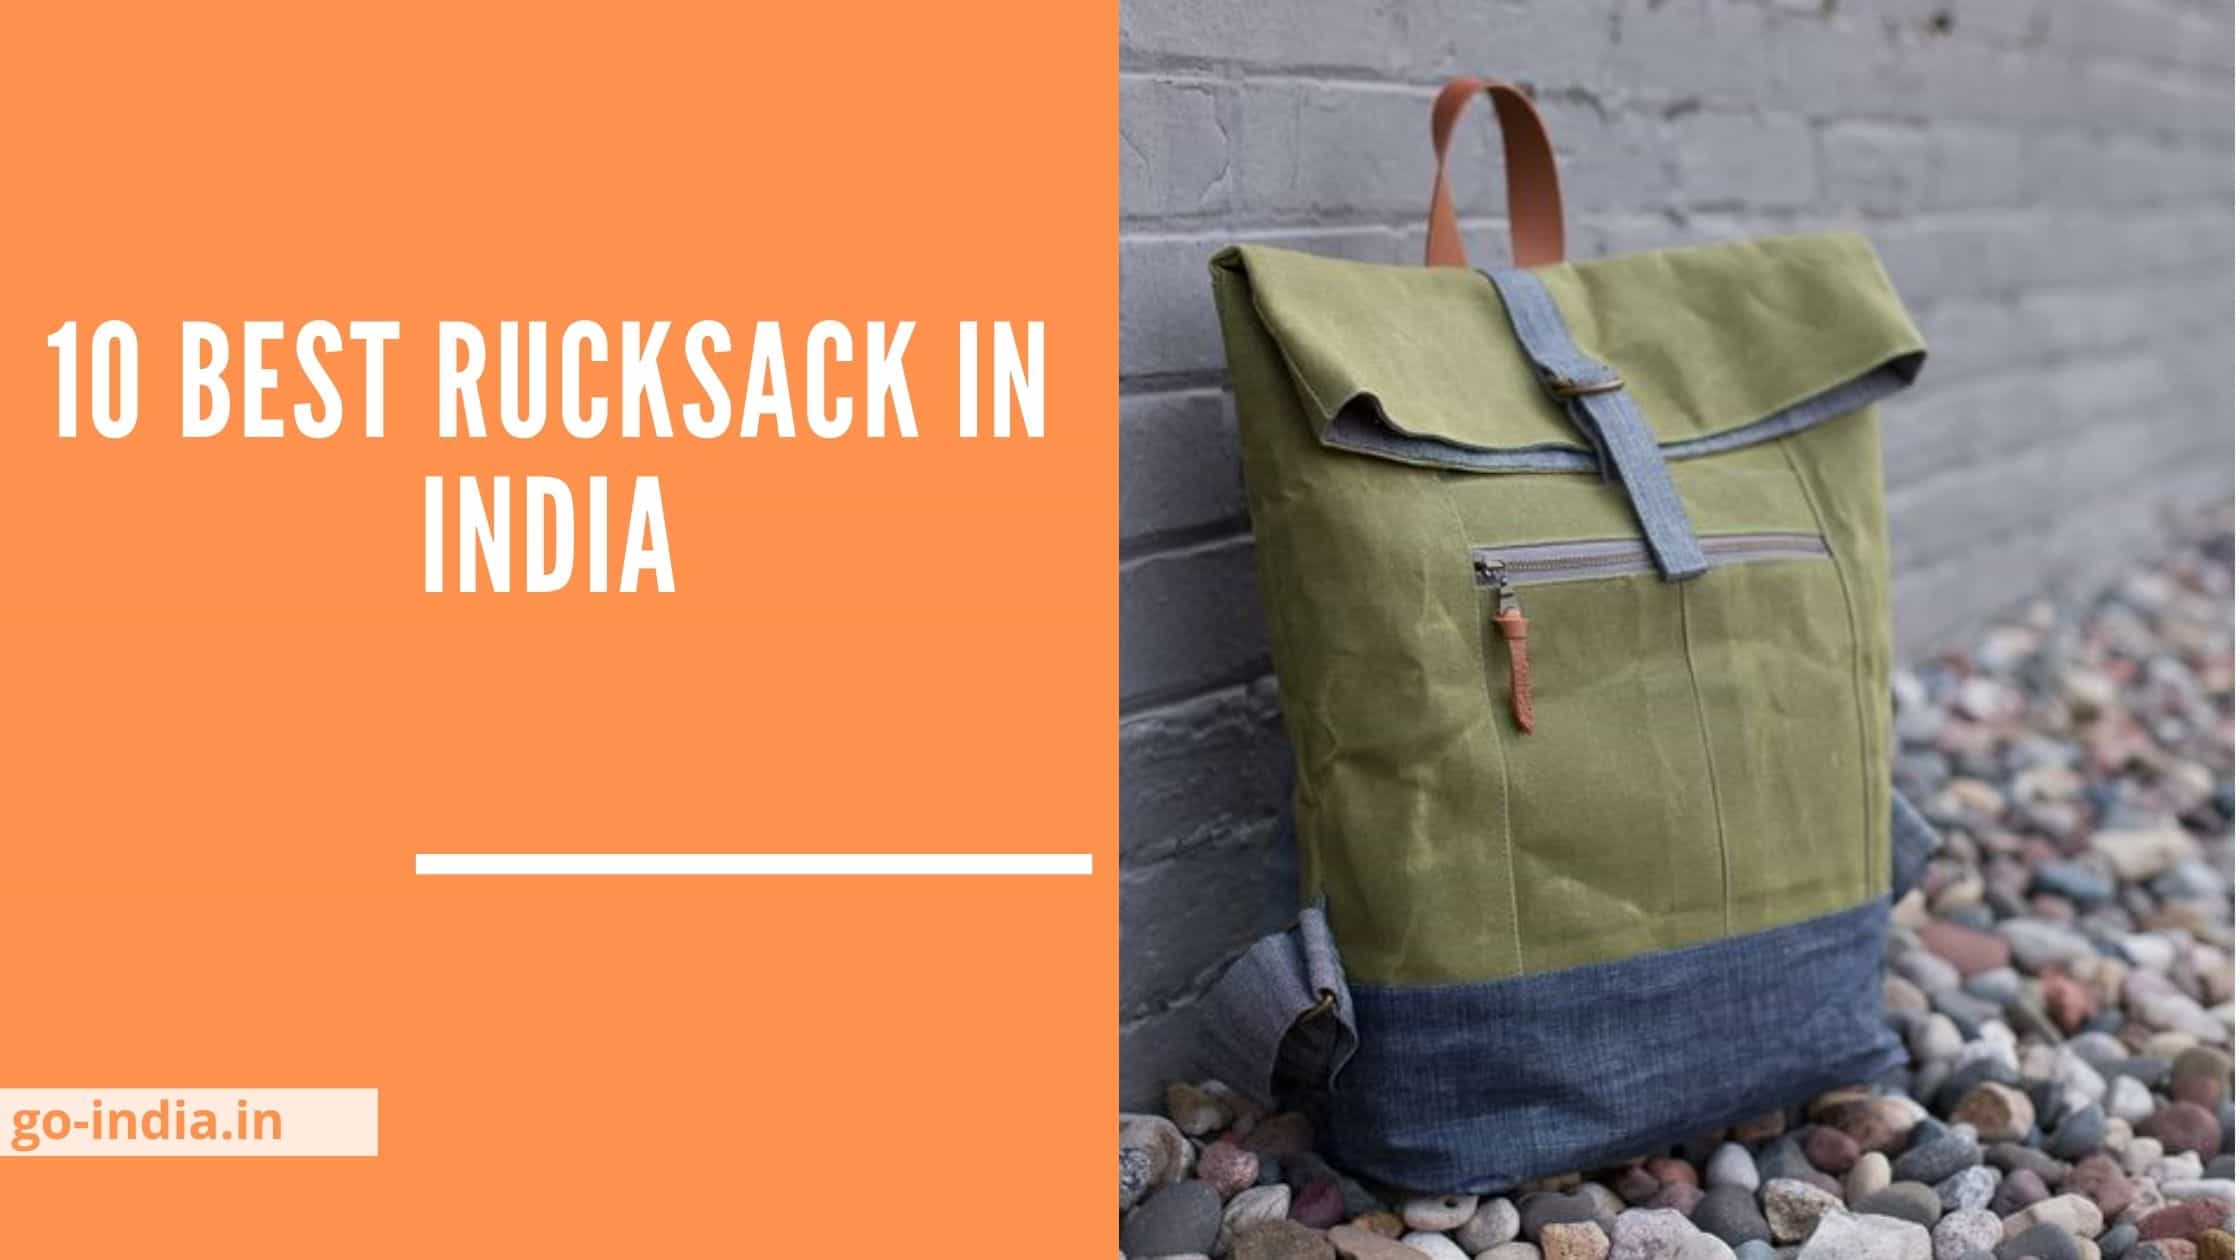 10 Best Rucksack in India